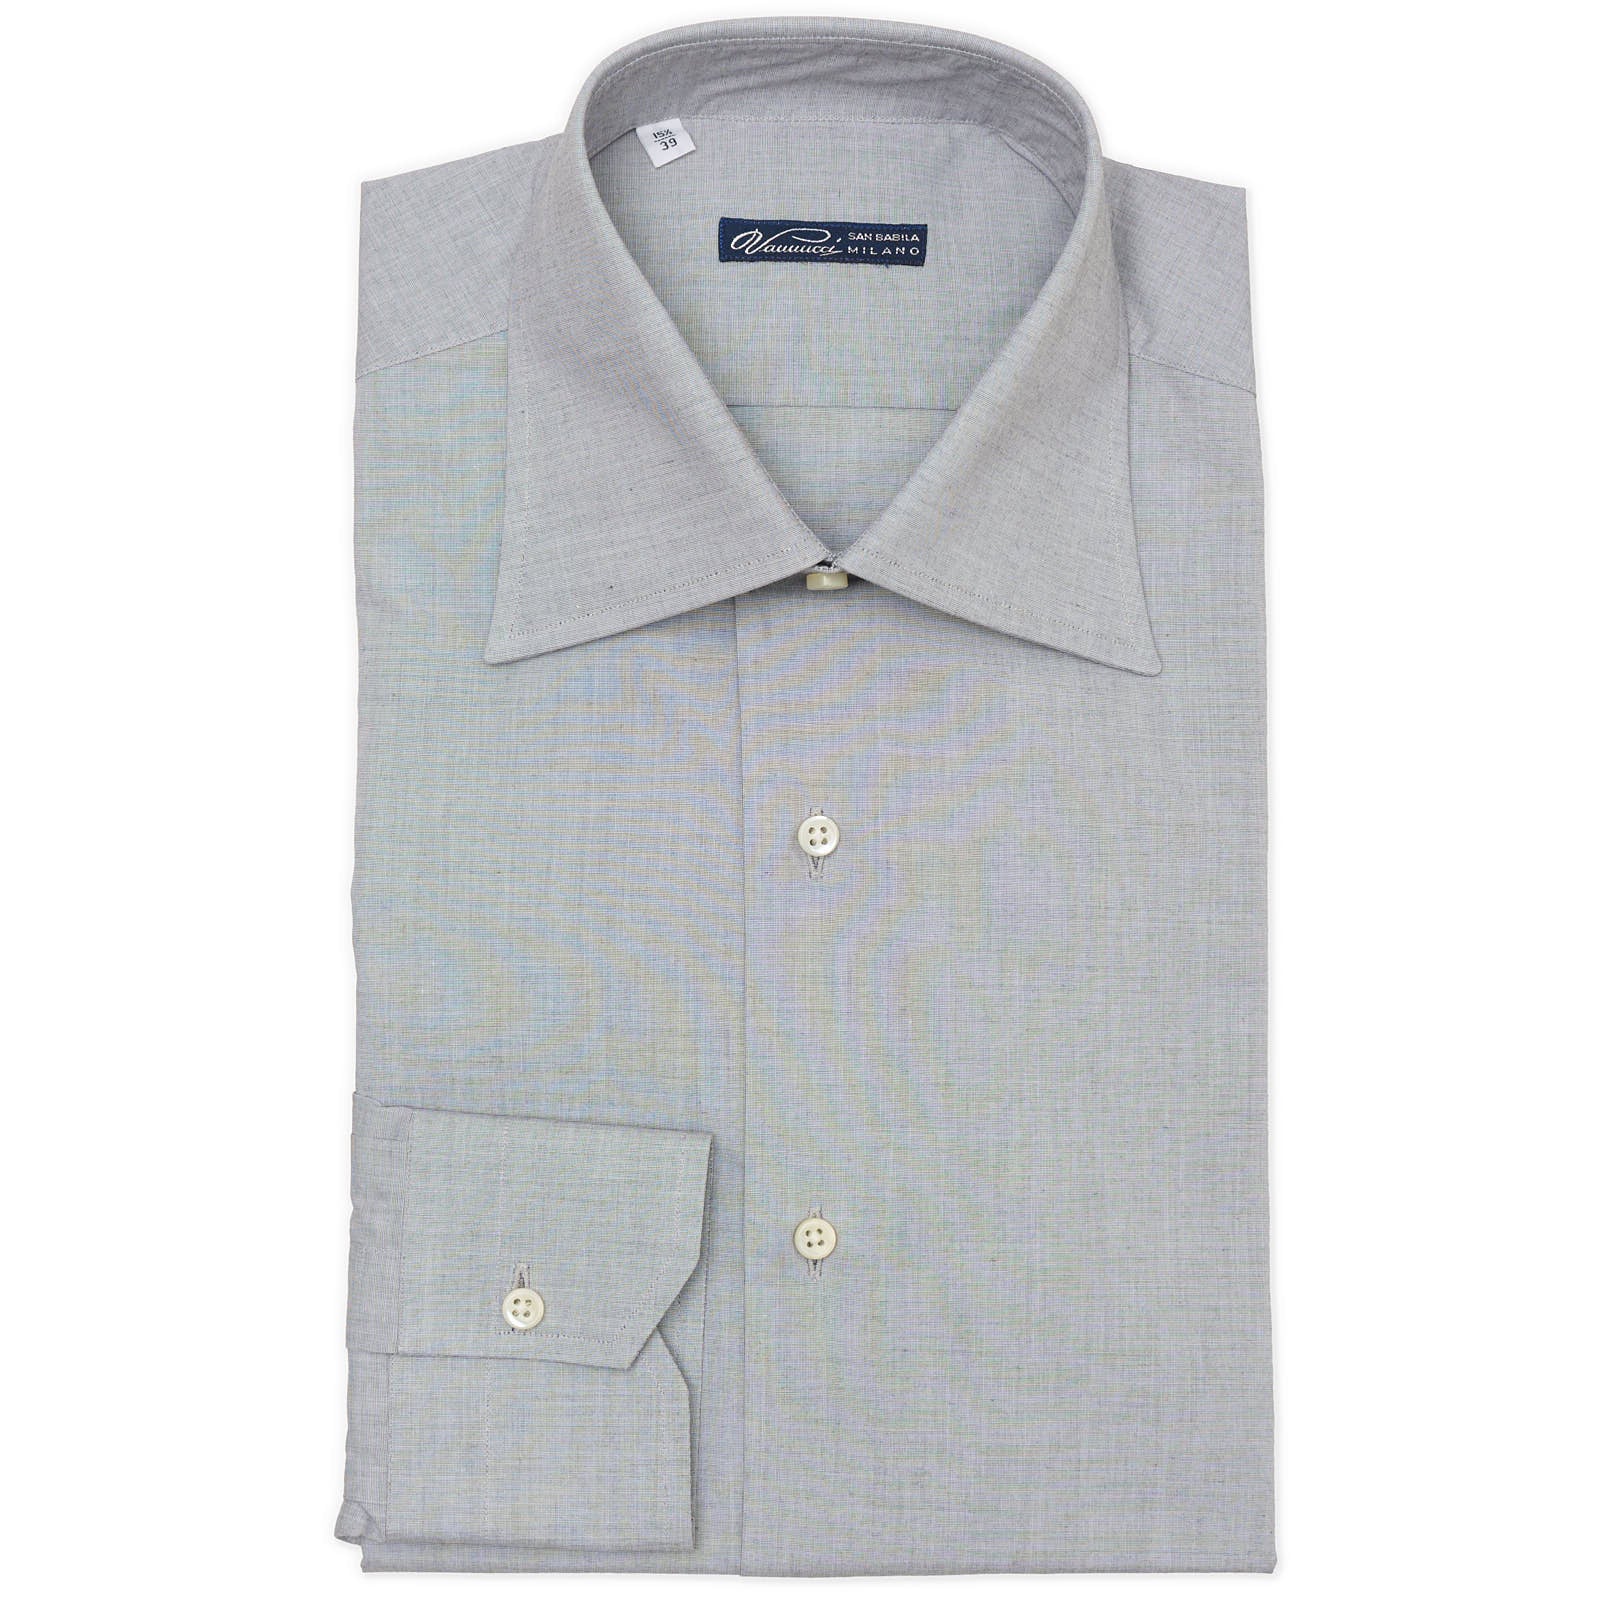 VANNUCCI Milano Light Gray Cotton Dress Shirt EU 39 NEW US 15.5